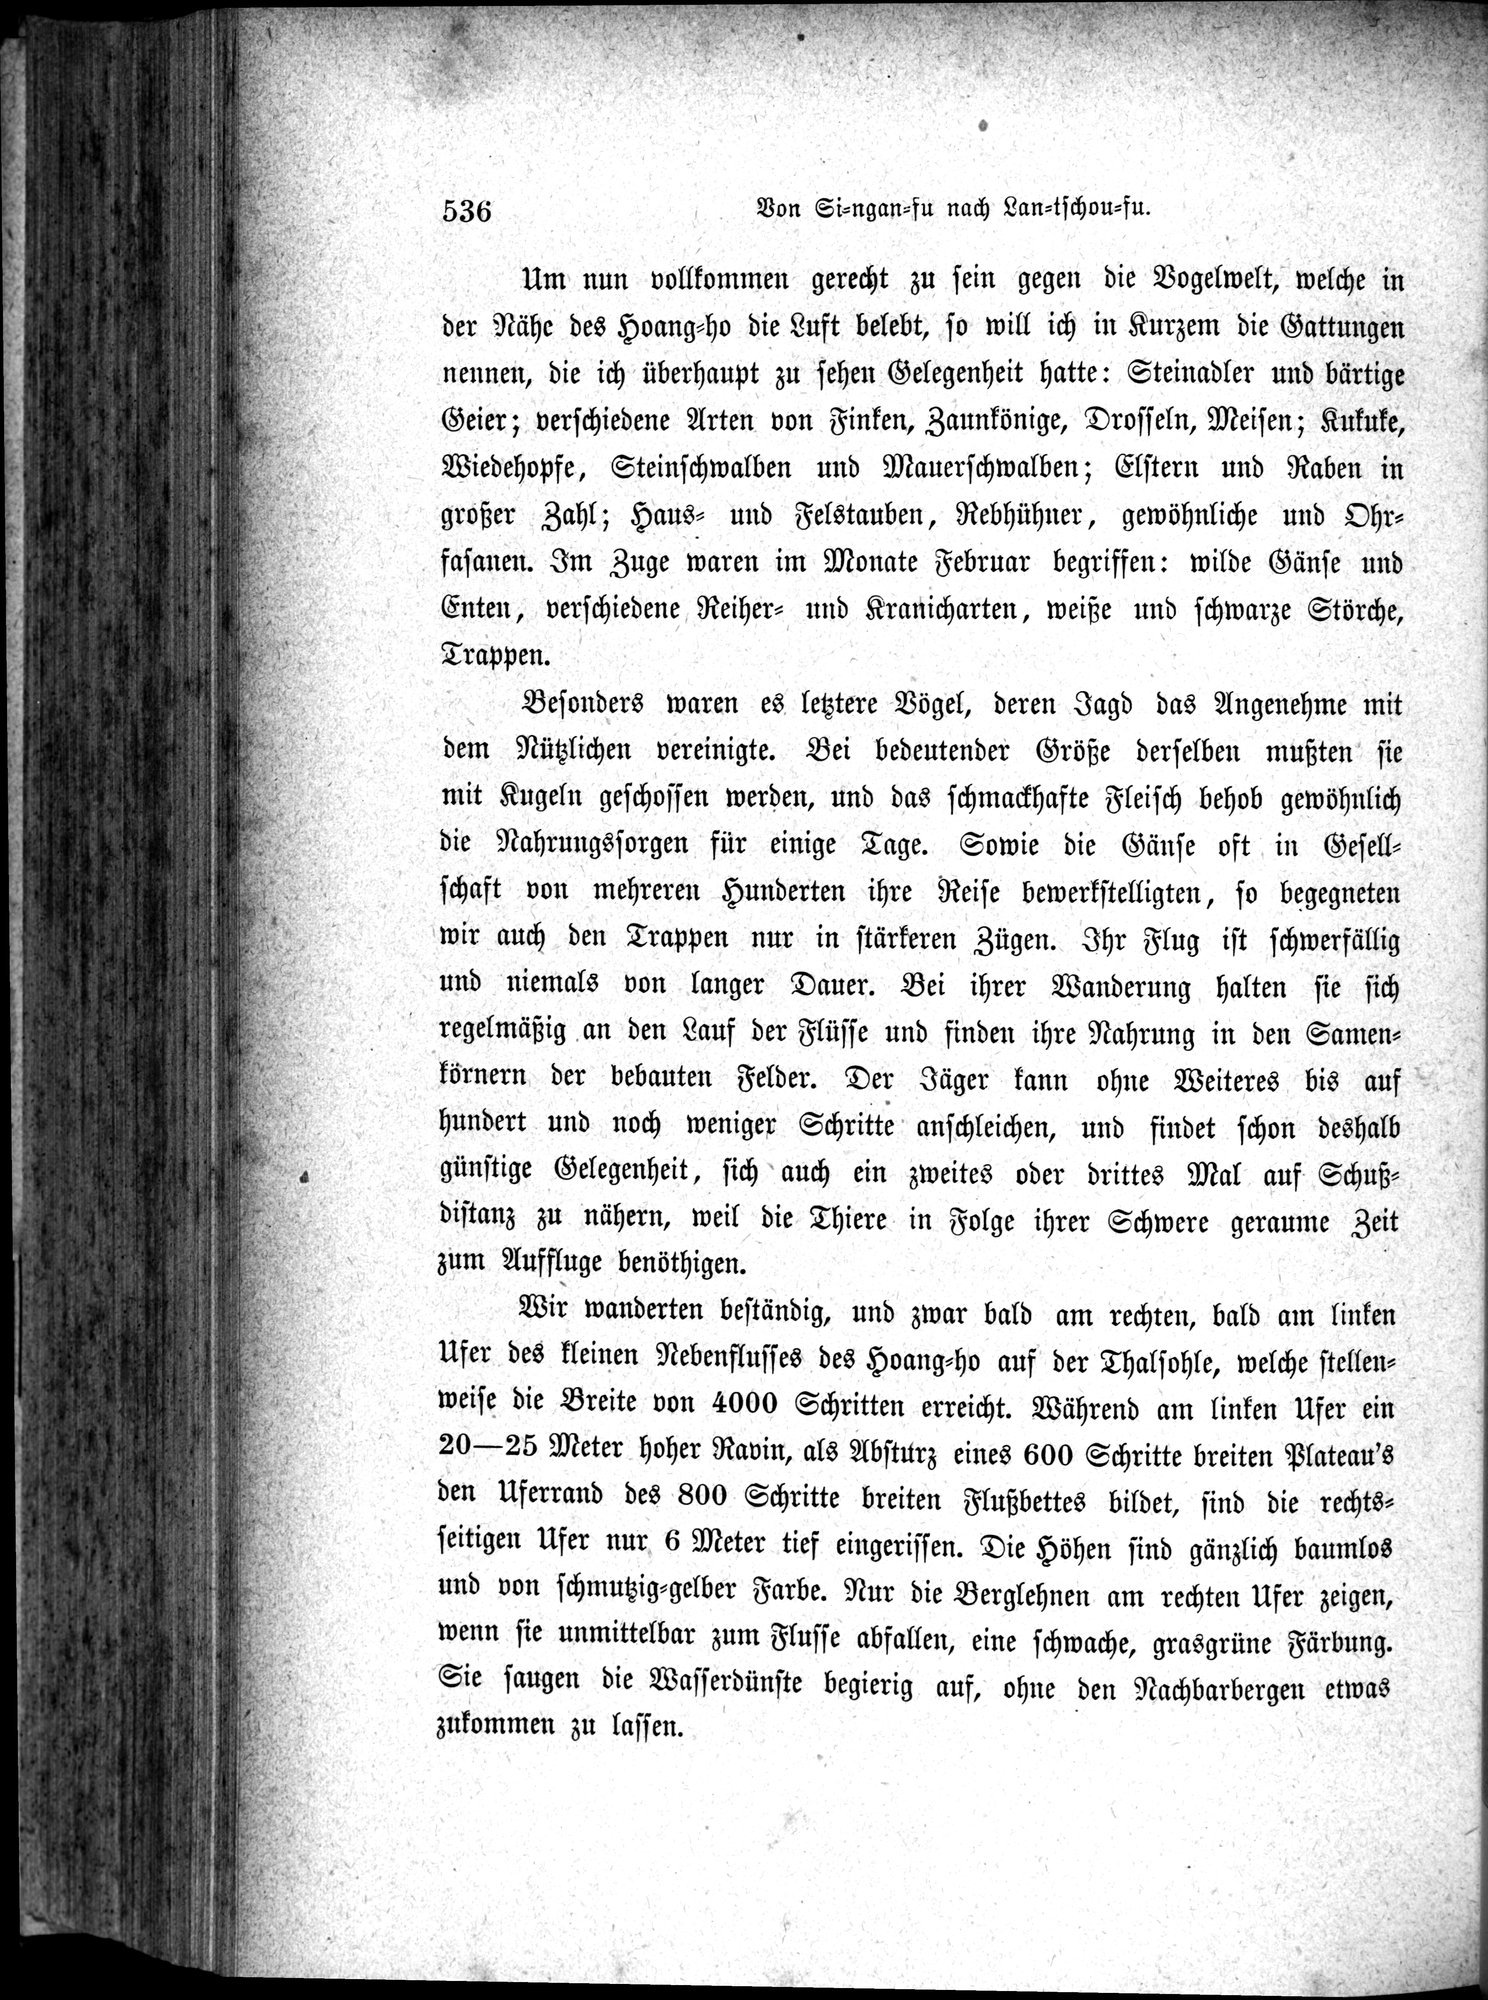 Im fernen Osten : vol.1 / Page 560 (Grayscale High Resolution Image)